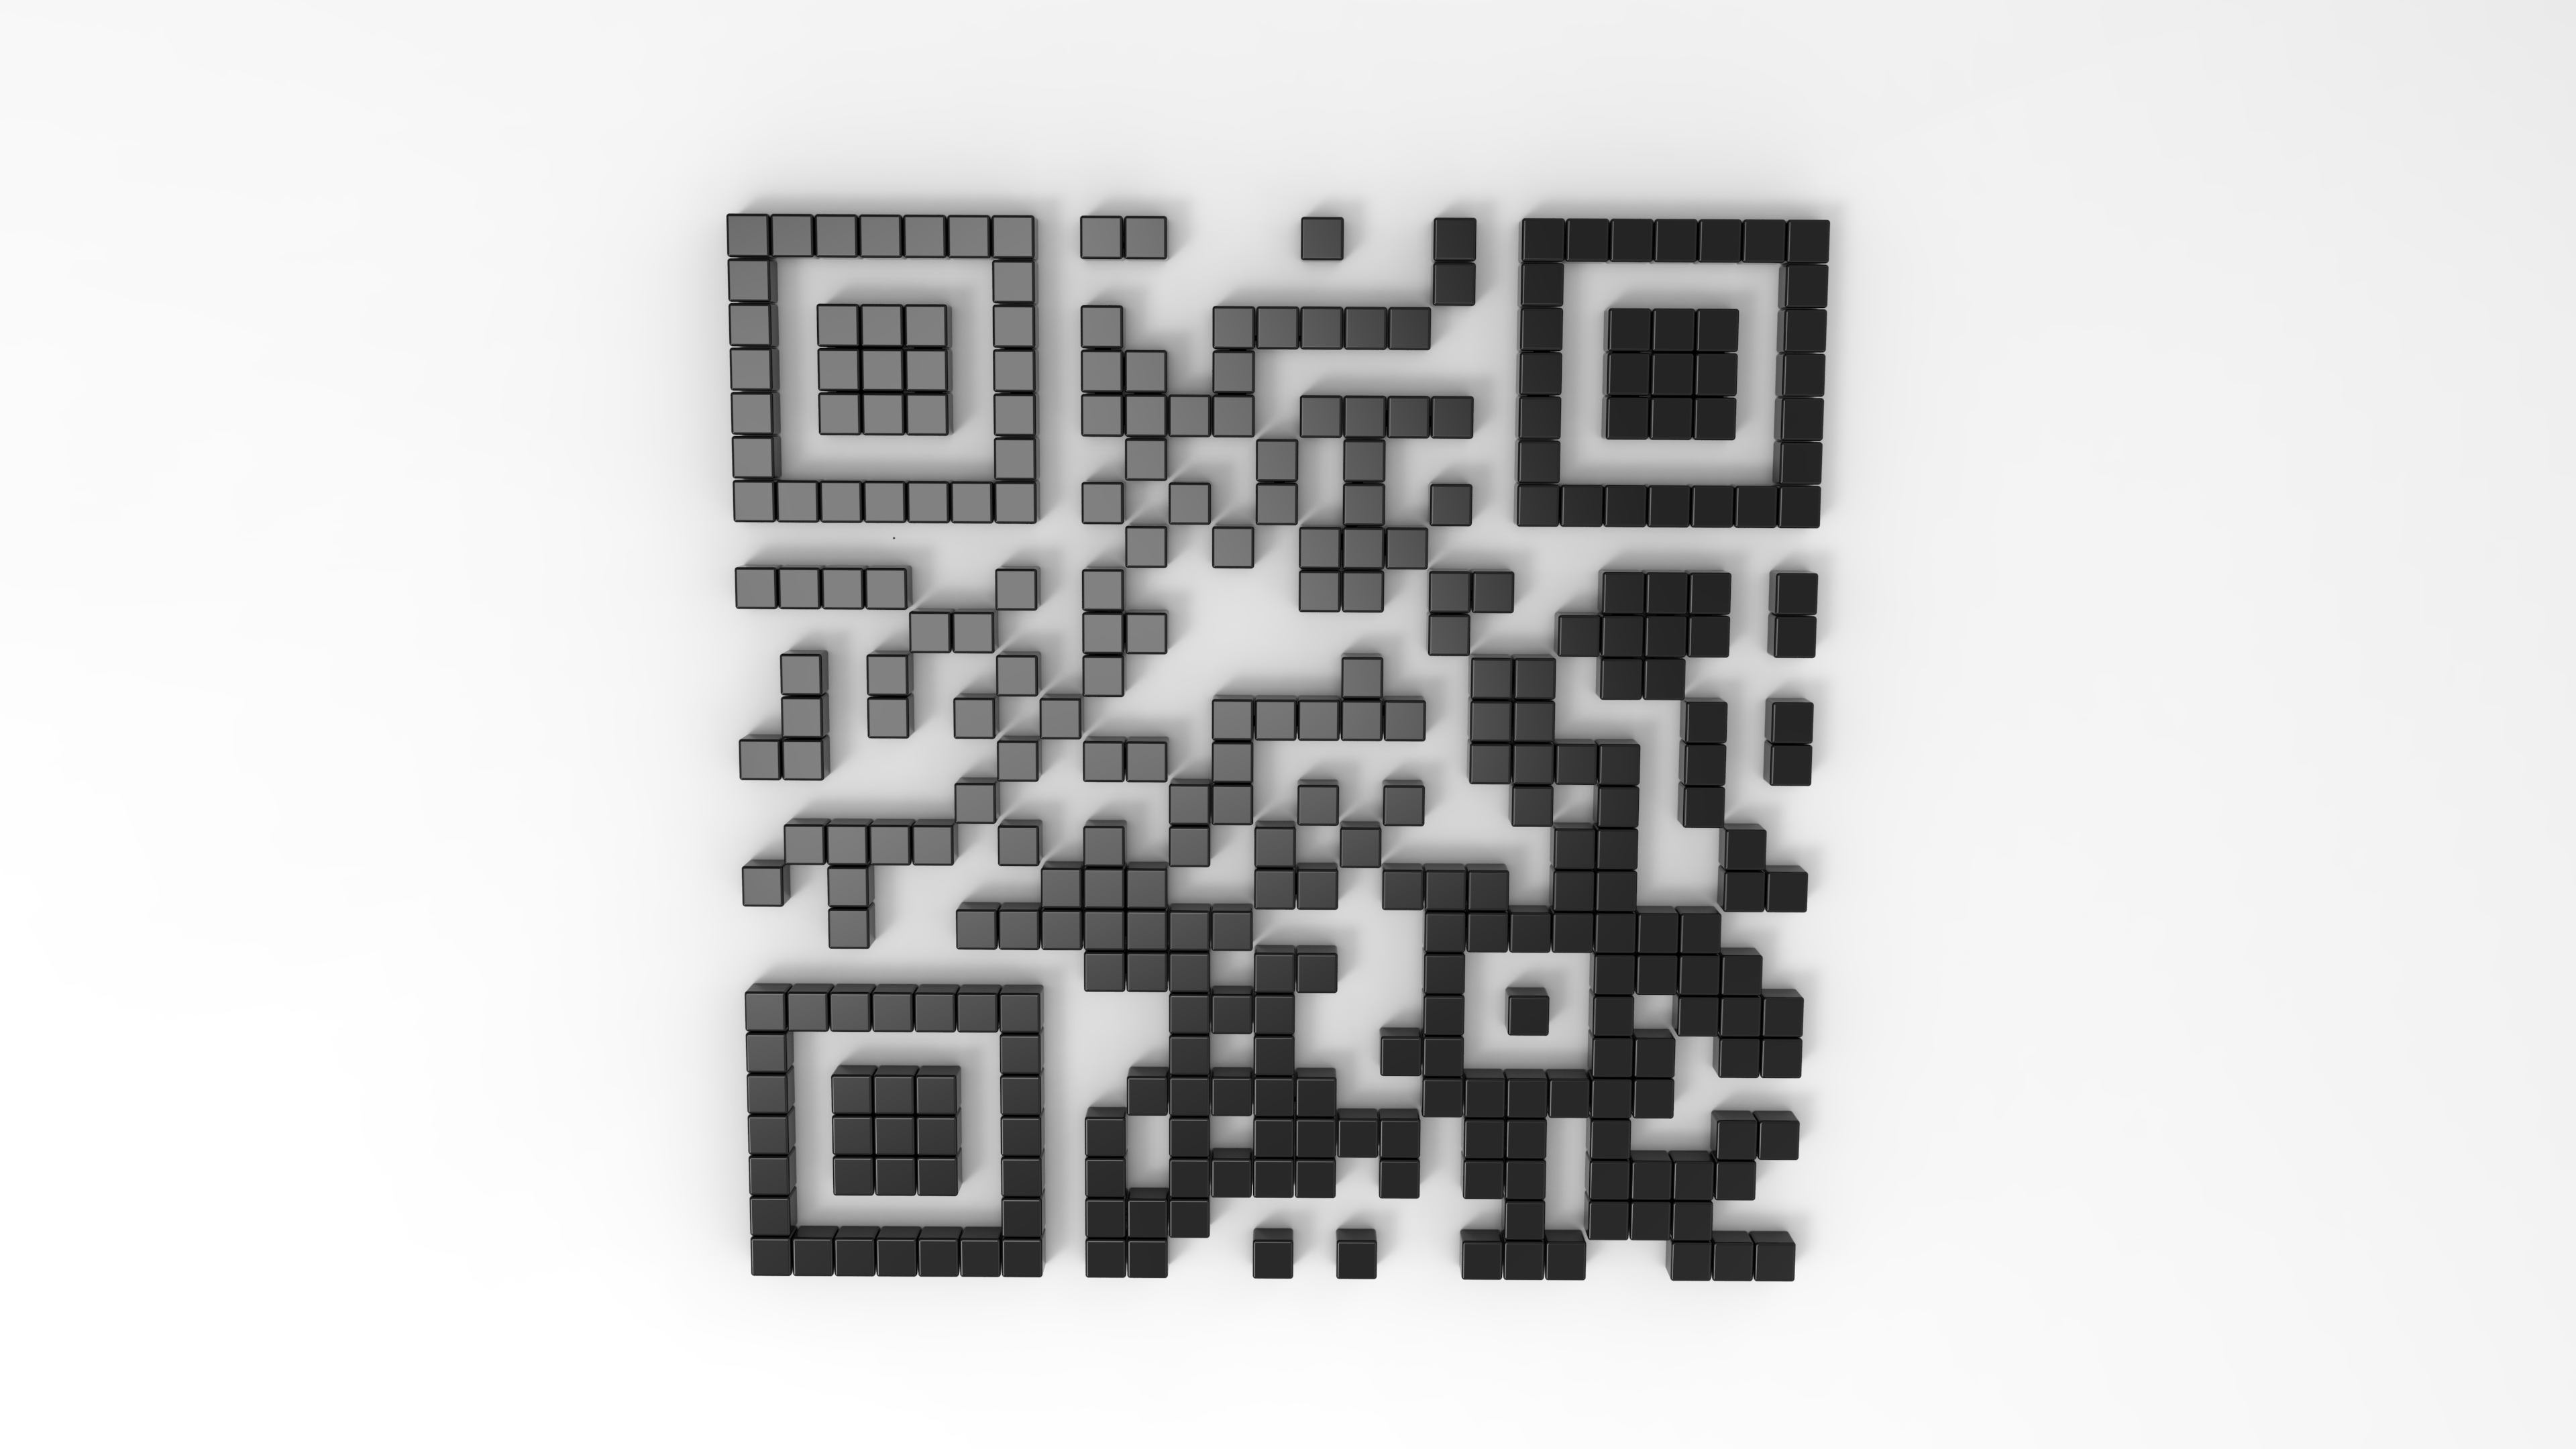 Qr код куба. 3д QR код. D&S люстра с19450/2+2 QR код. Распечатка QR кодов. Куб с QR кодом.